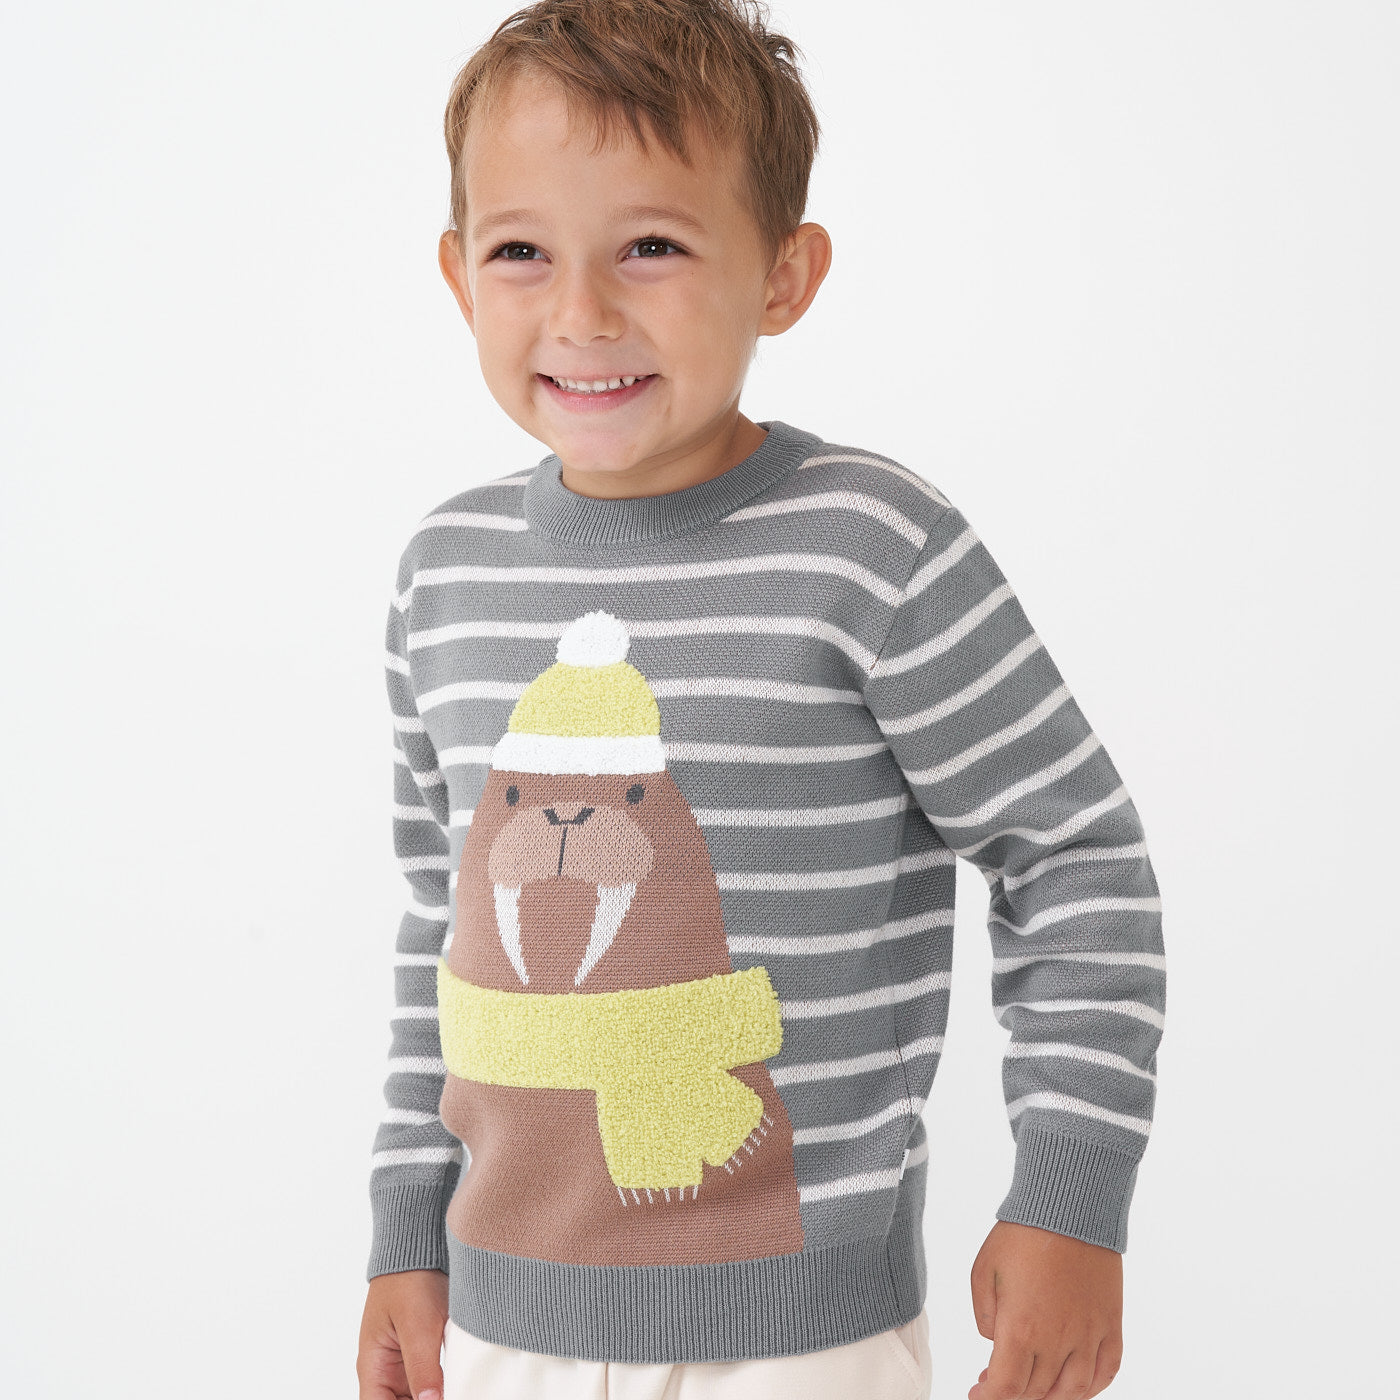 Child laughing wearing a Walrus knit sweater